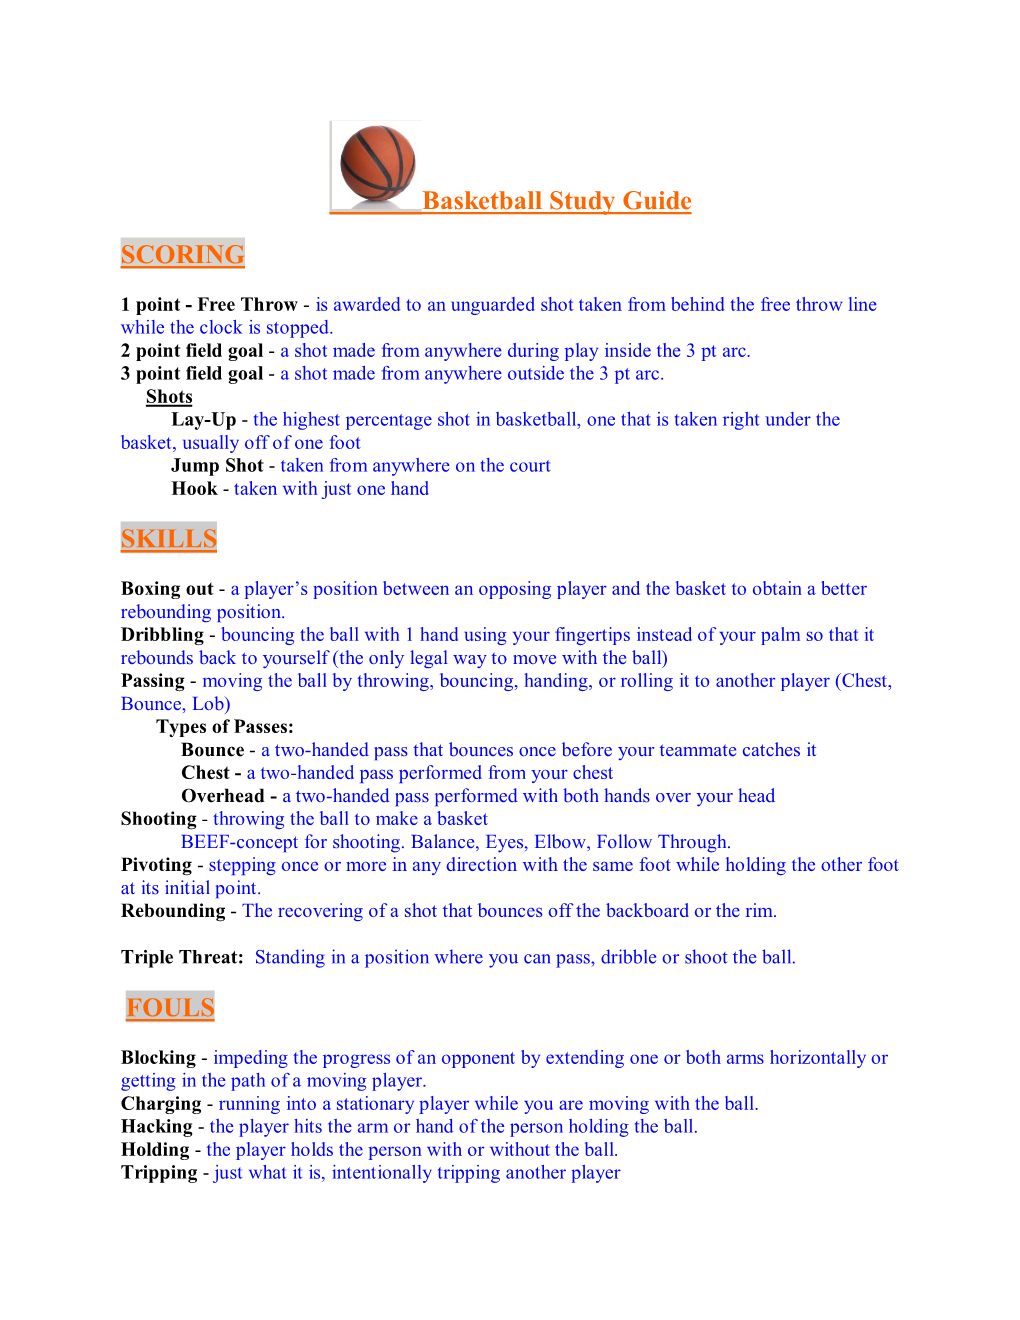 Basketball Study Guide SCORING SKILLS FOULS